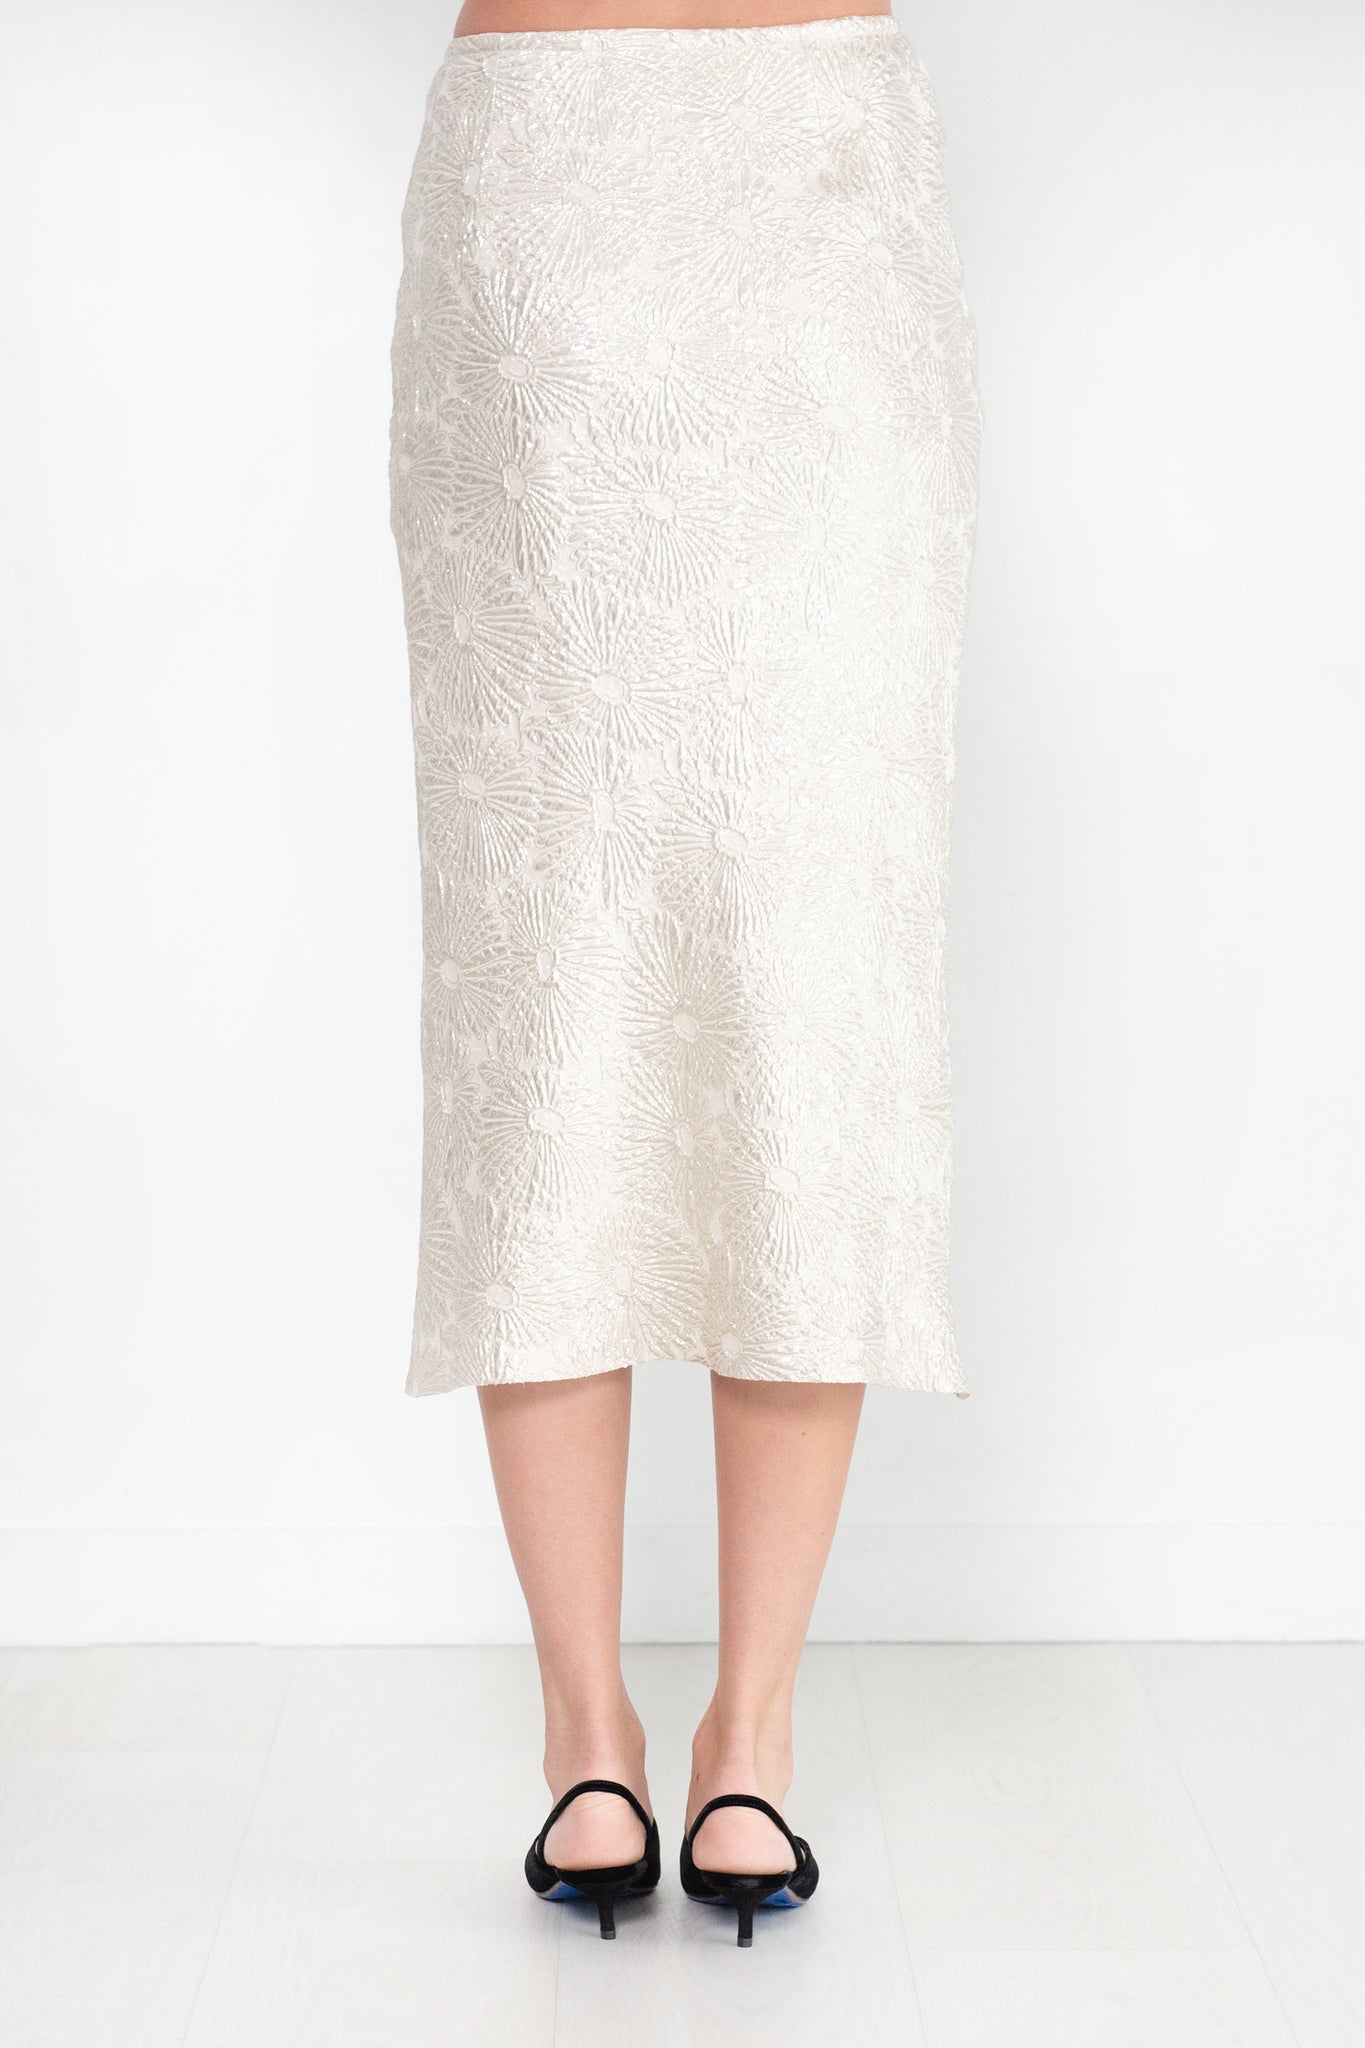 Dries Van Noten - Sparkle Skirt, Silver